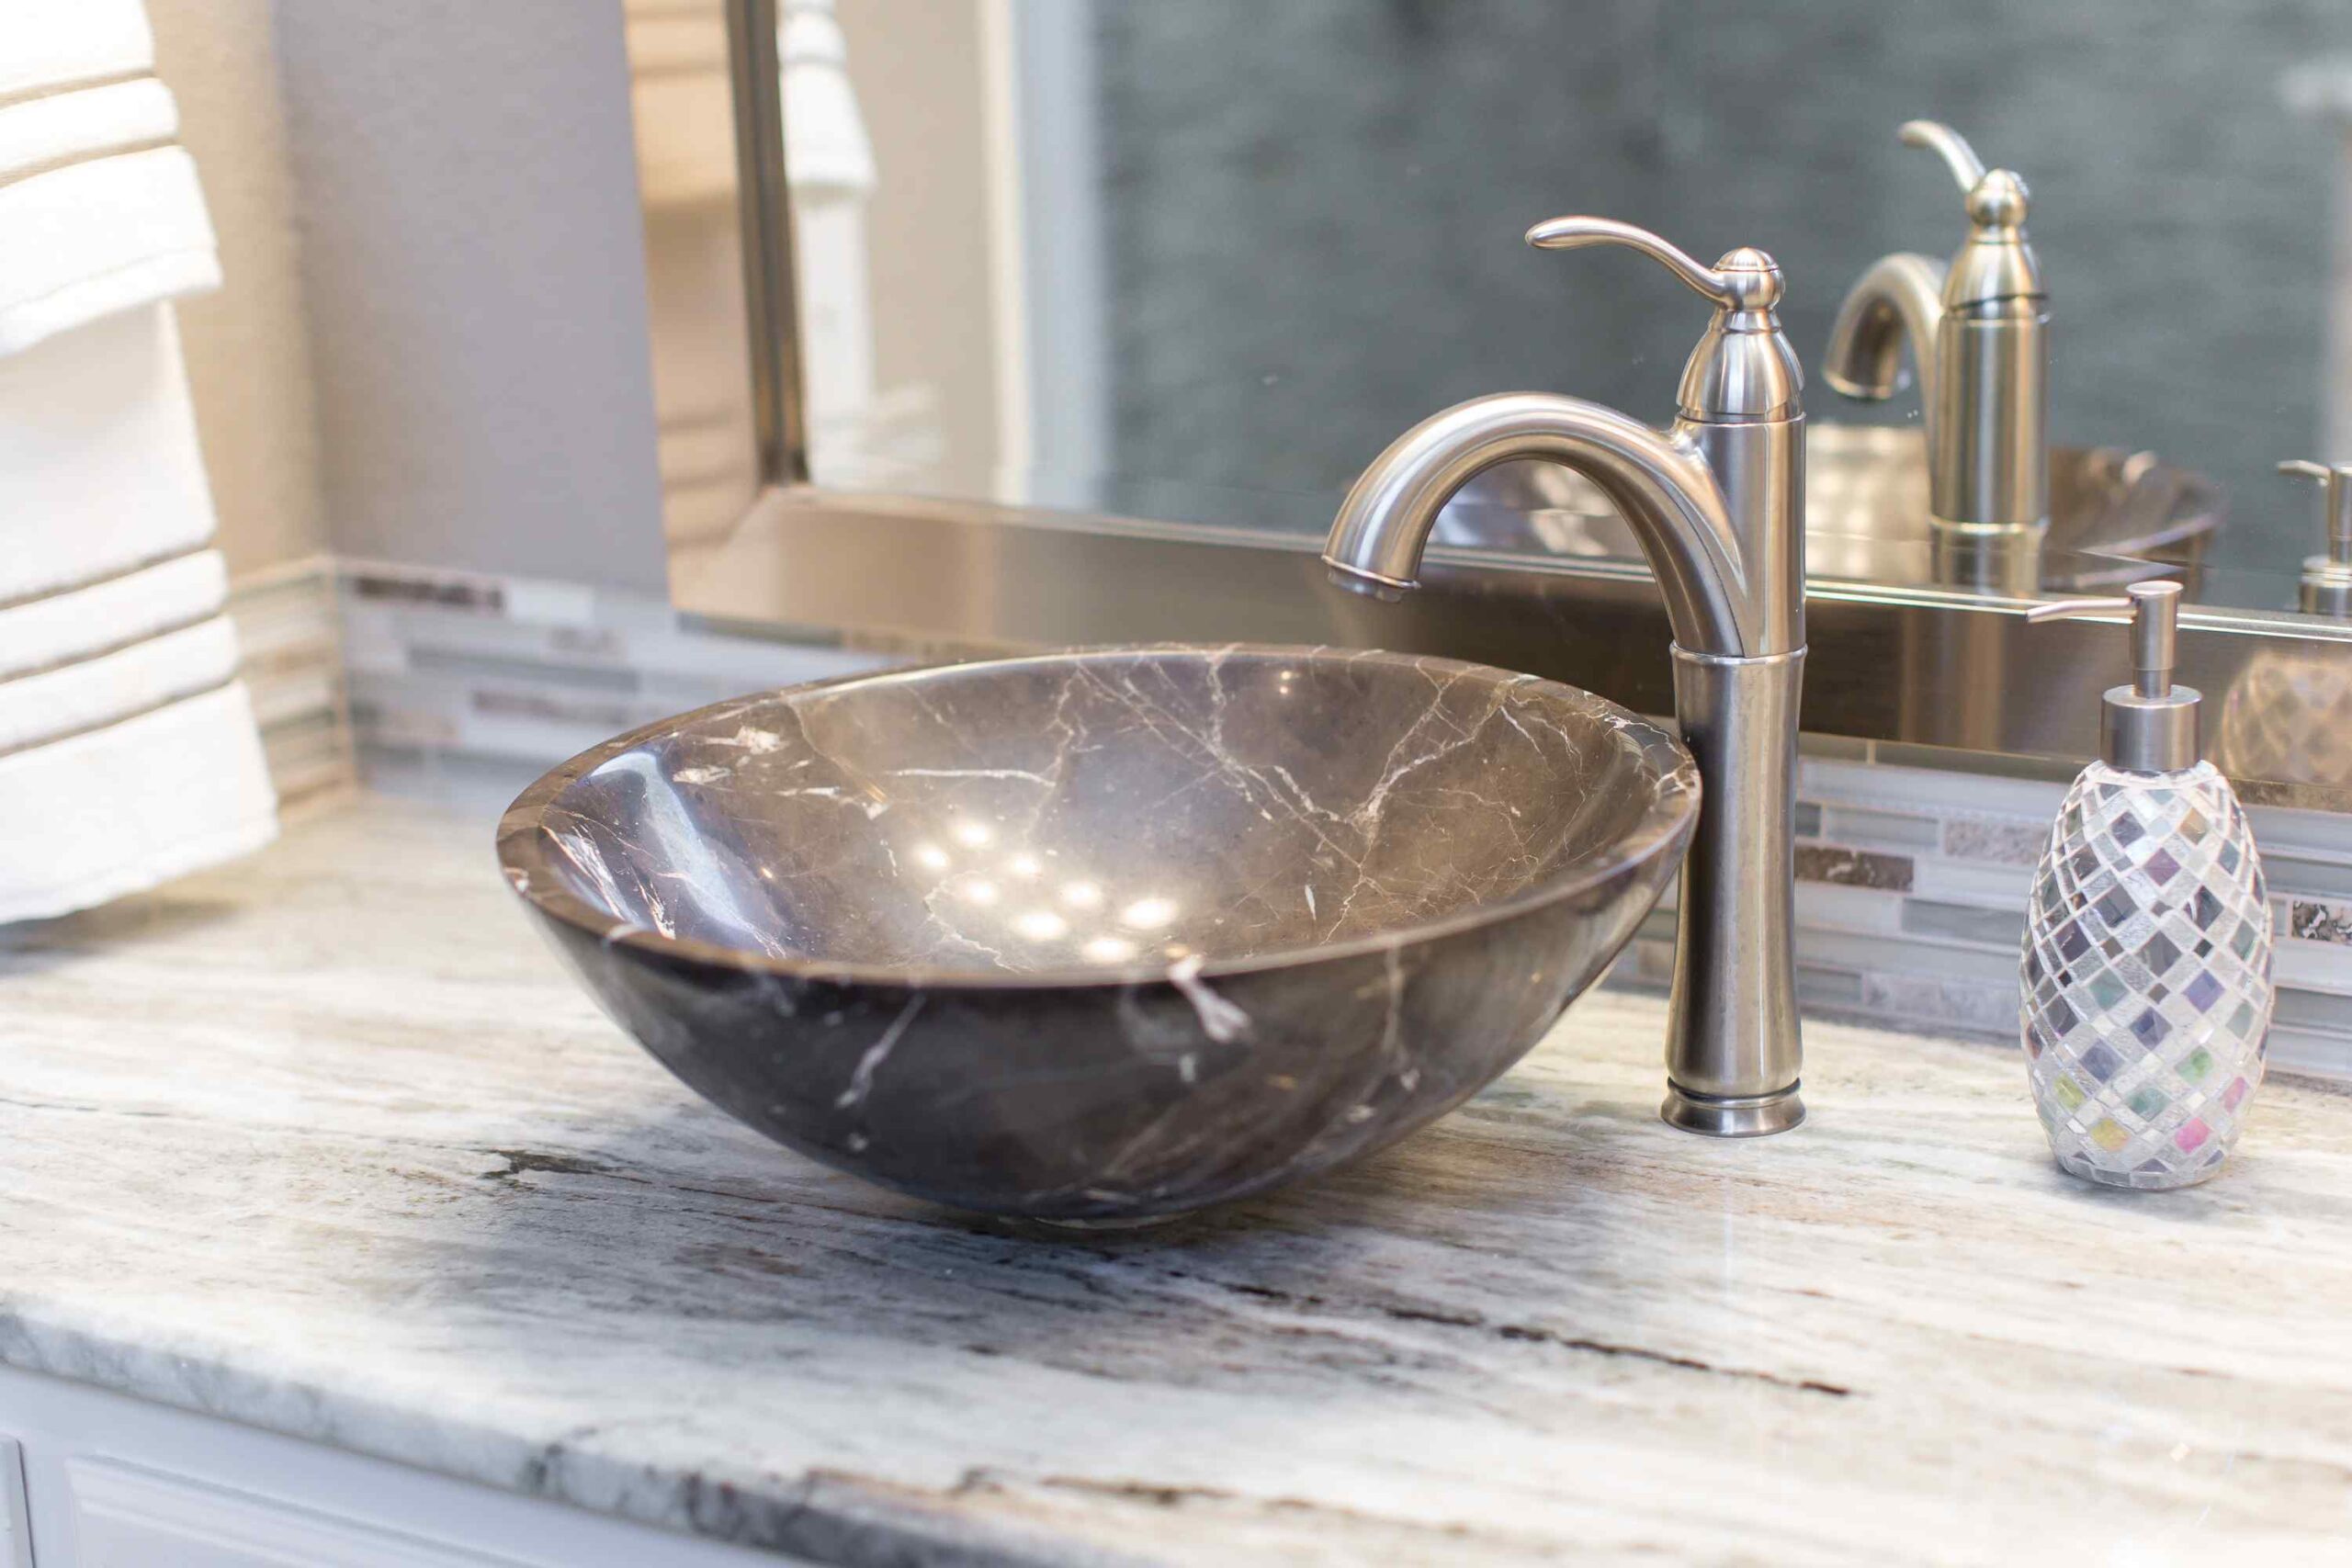 Modern Blu bathrooms luxury faucet - Also offering Kitchen Remodeling in Flower Mound TX